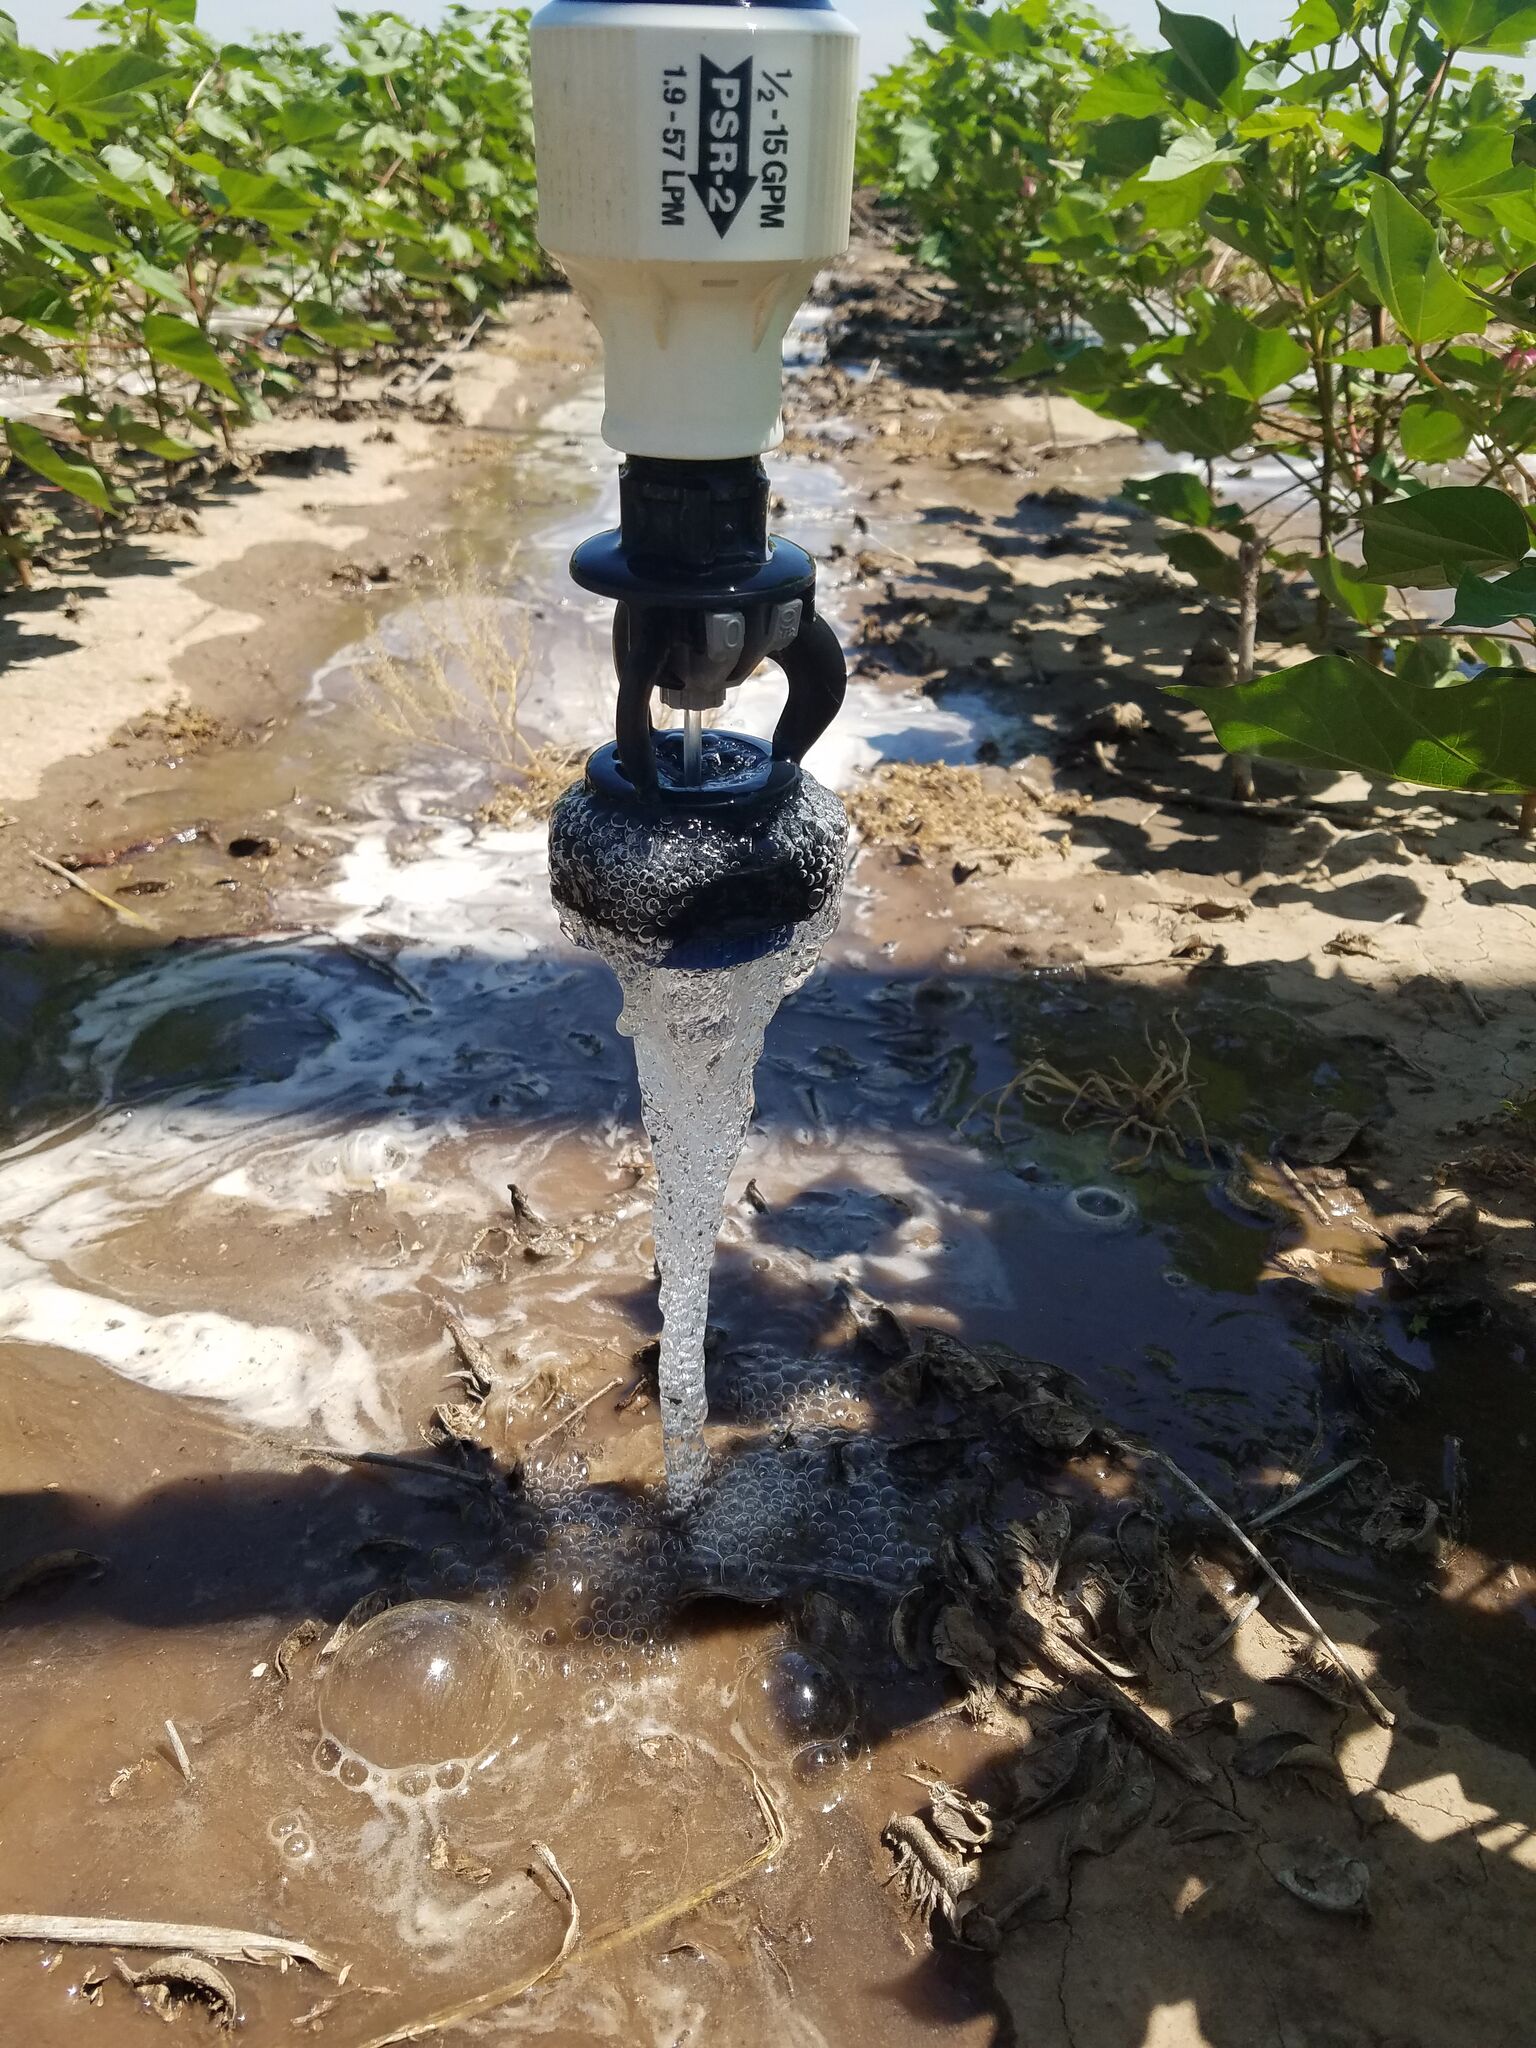 Texas Tech Professors Offer Best Practices for Smart Irrigation